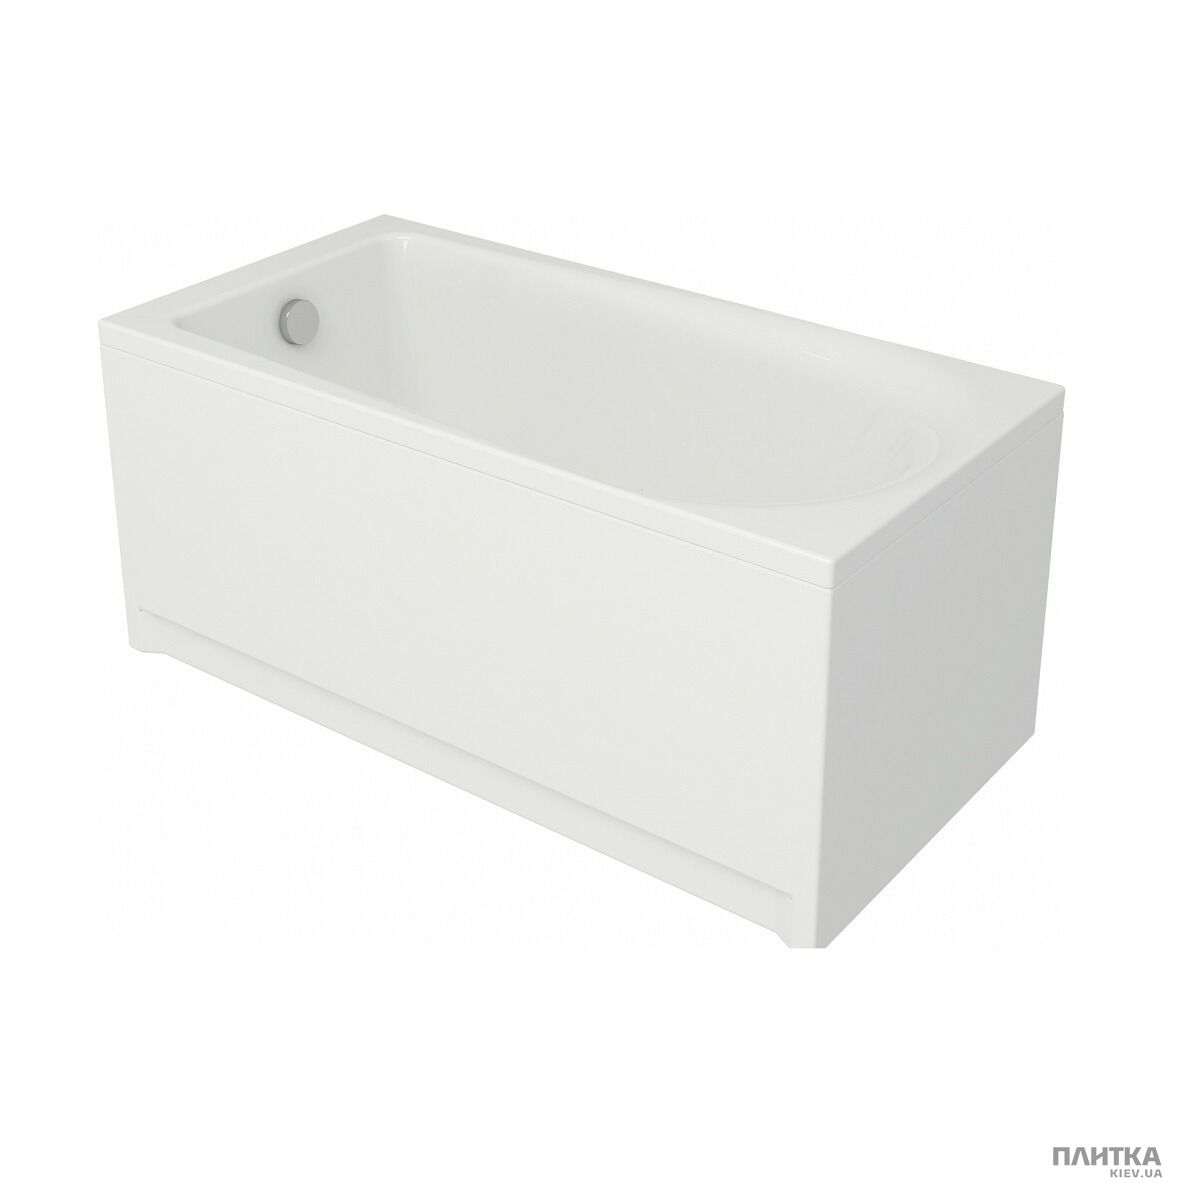 Акриловая ванна Cersanit Flavia Ванна 150x70 COVER+ белый